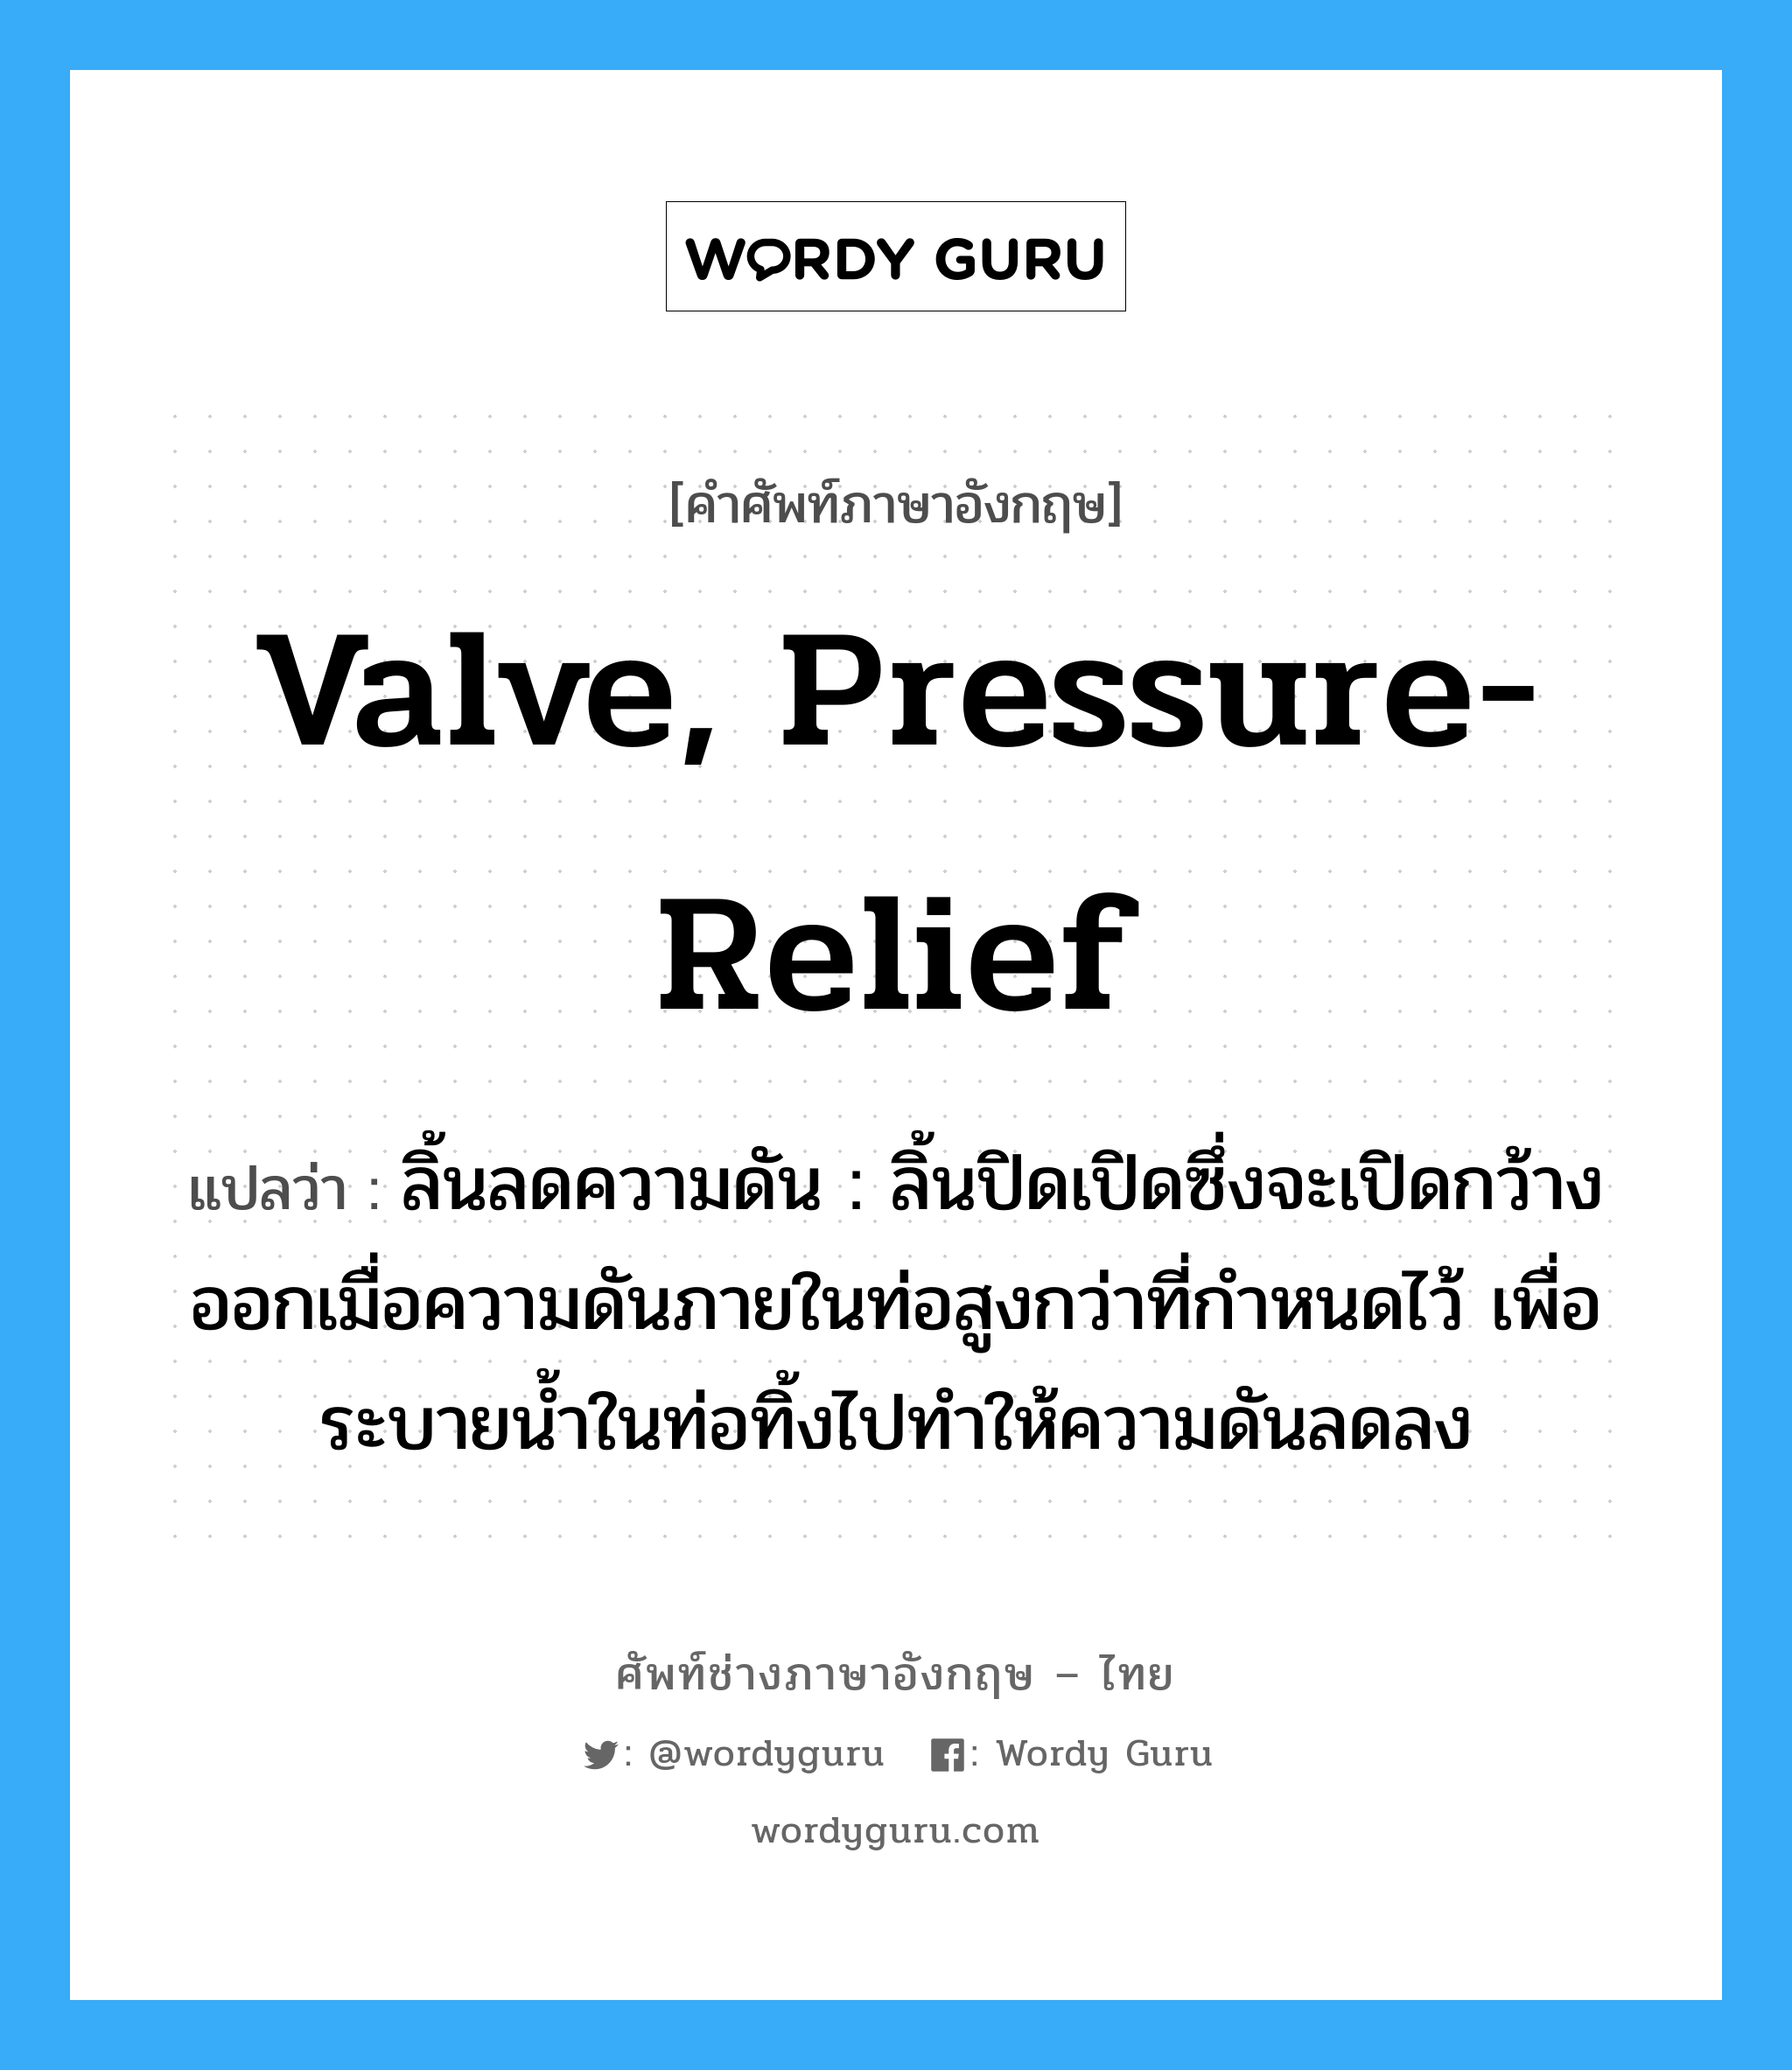 valve, pressure-relief แปลว่า?, คำศัพท์ช่างภาษาอังกฤษ - ไทย valve, pressure-relief คำศัพท์ภาษาอังกฤษ valve, pressure-relief แปลว่า ลิ้นลดความดัน : ลิ้นปิดเปิดซึ่งจะเปิดกว้างออกเมื่อความดันภายในท่อสูงกว่าที่กำหนดไว้ เพื่อระบายน้ำในท่อทิ้งไปทำให้ความดันลดลง